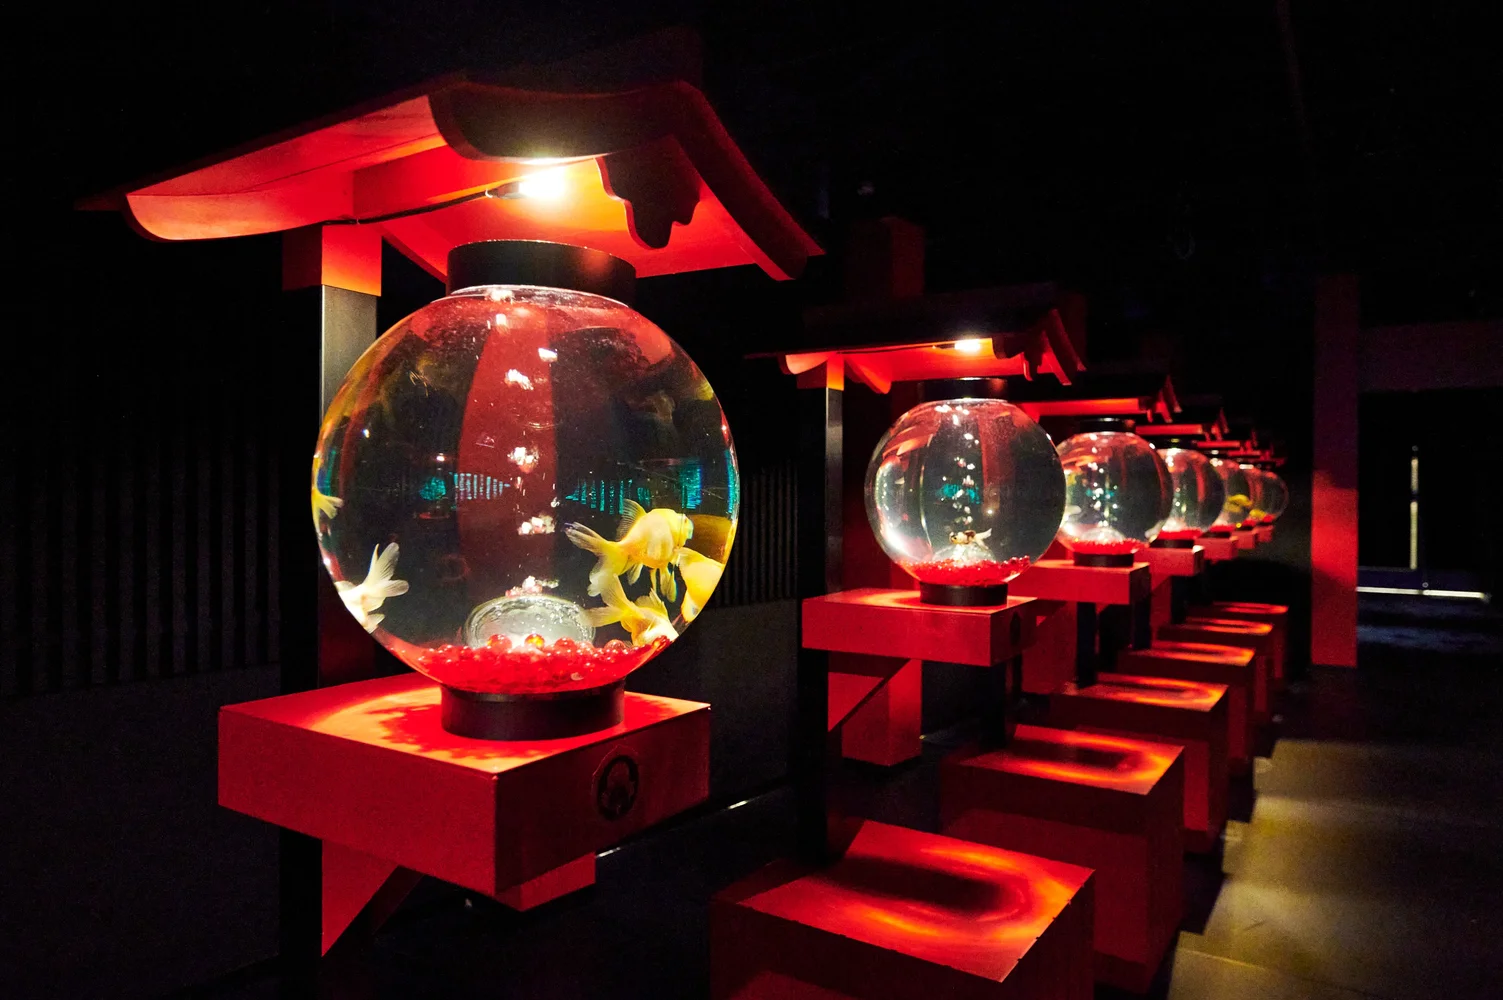 The "Chochin-rium," a fish tank that resembles a lantern, changes its arrangement and goldfish each season.